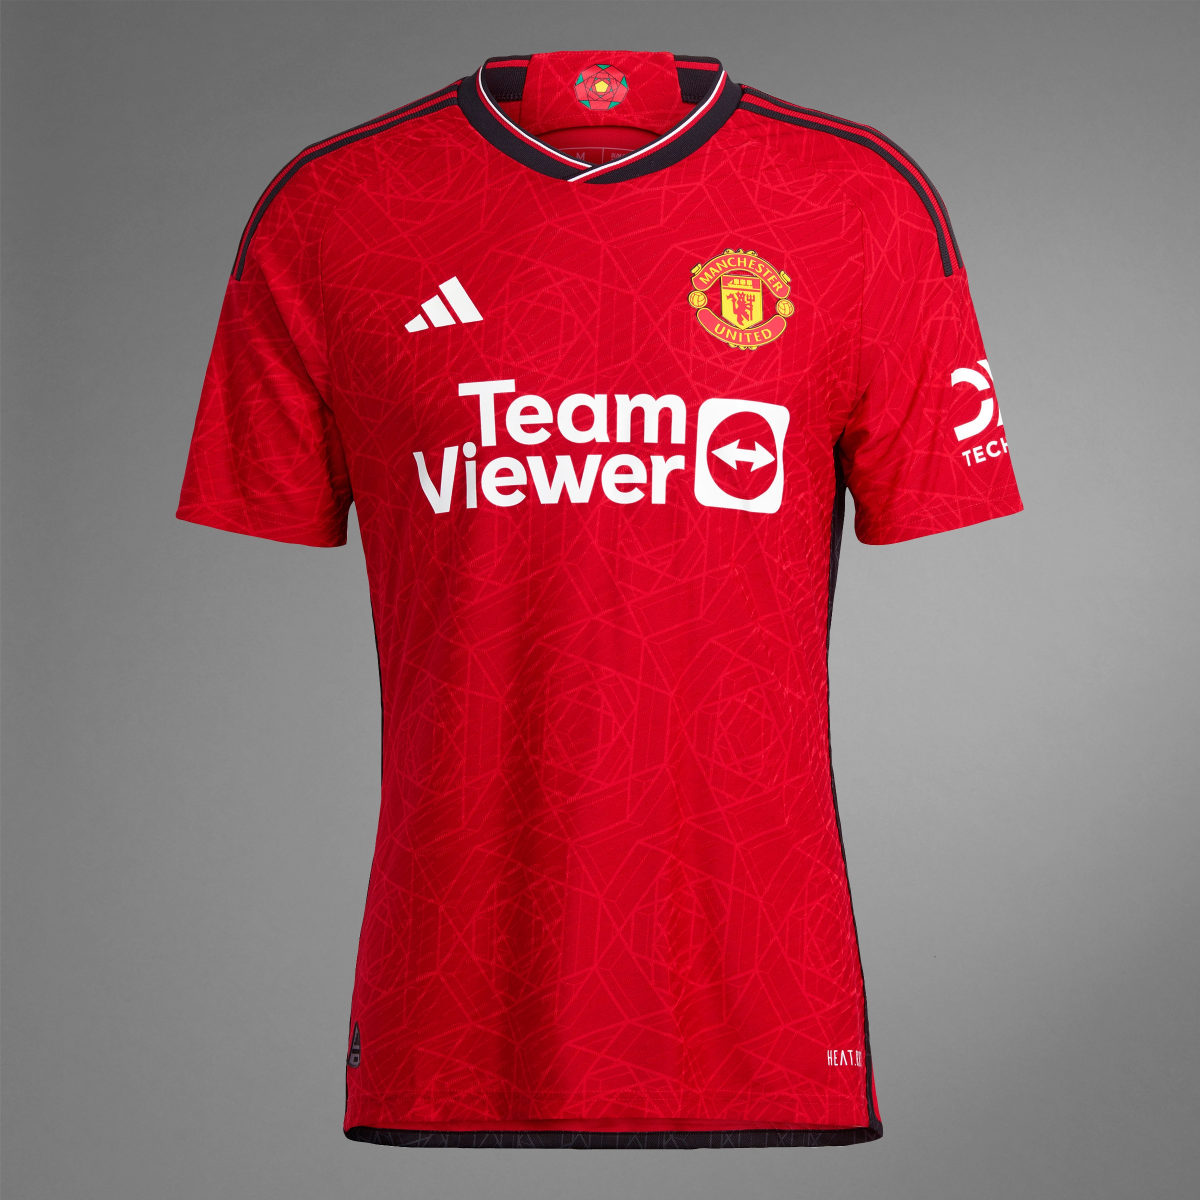 Adidas Camisola Principal Oficial 23/24 do Manchester United. 11